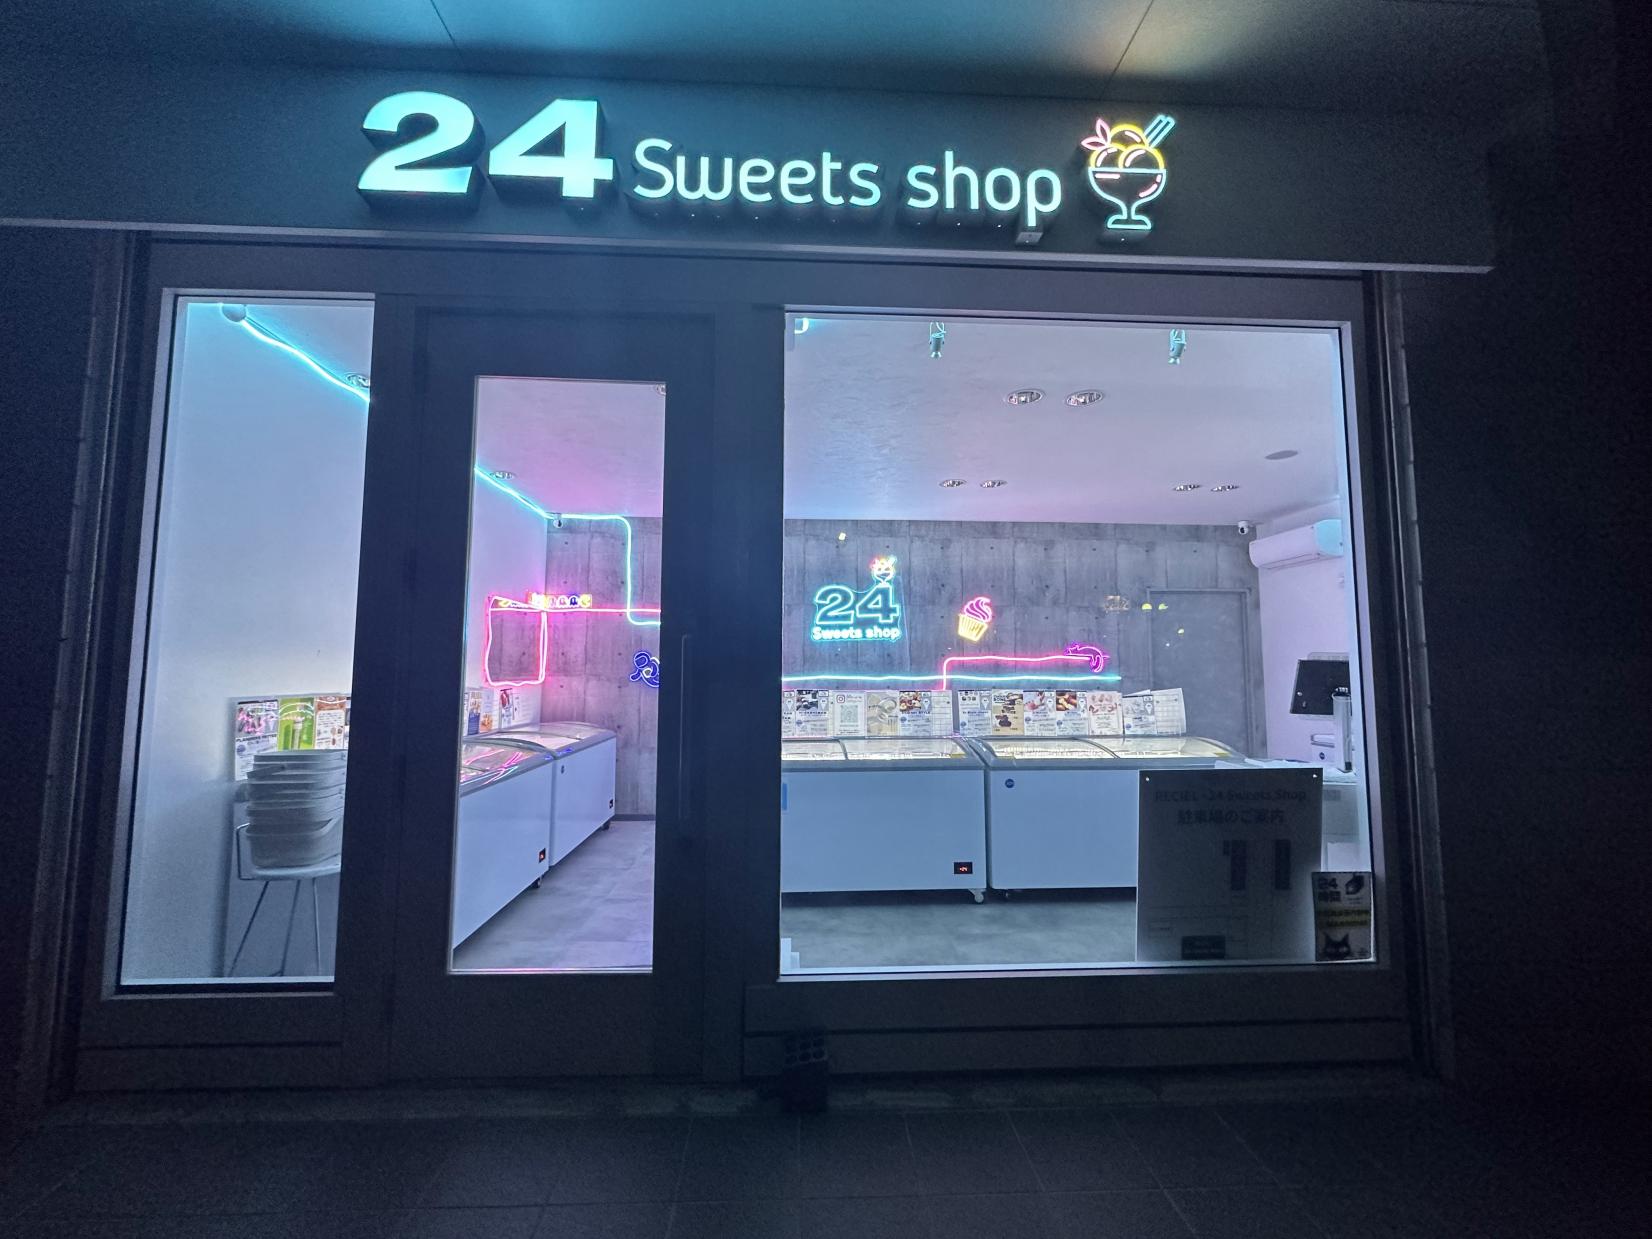 24weets shop 伊勢店-3